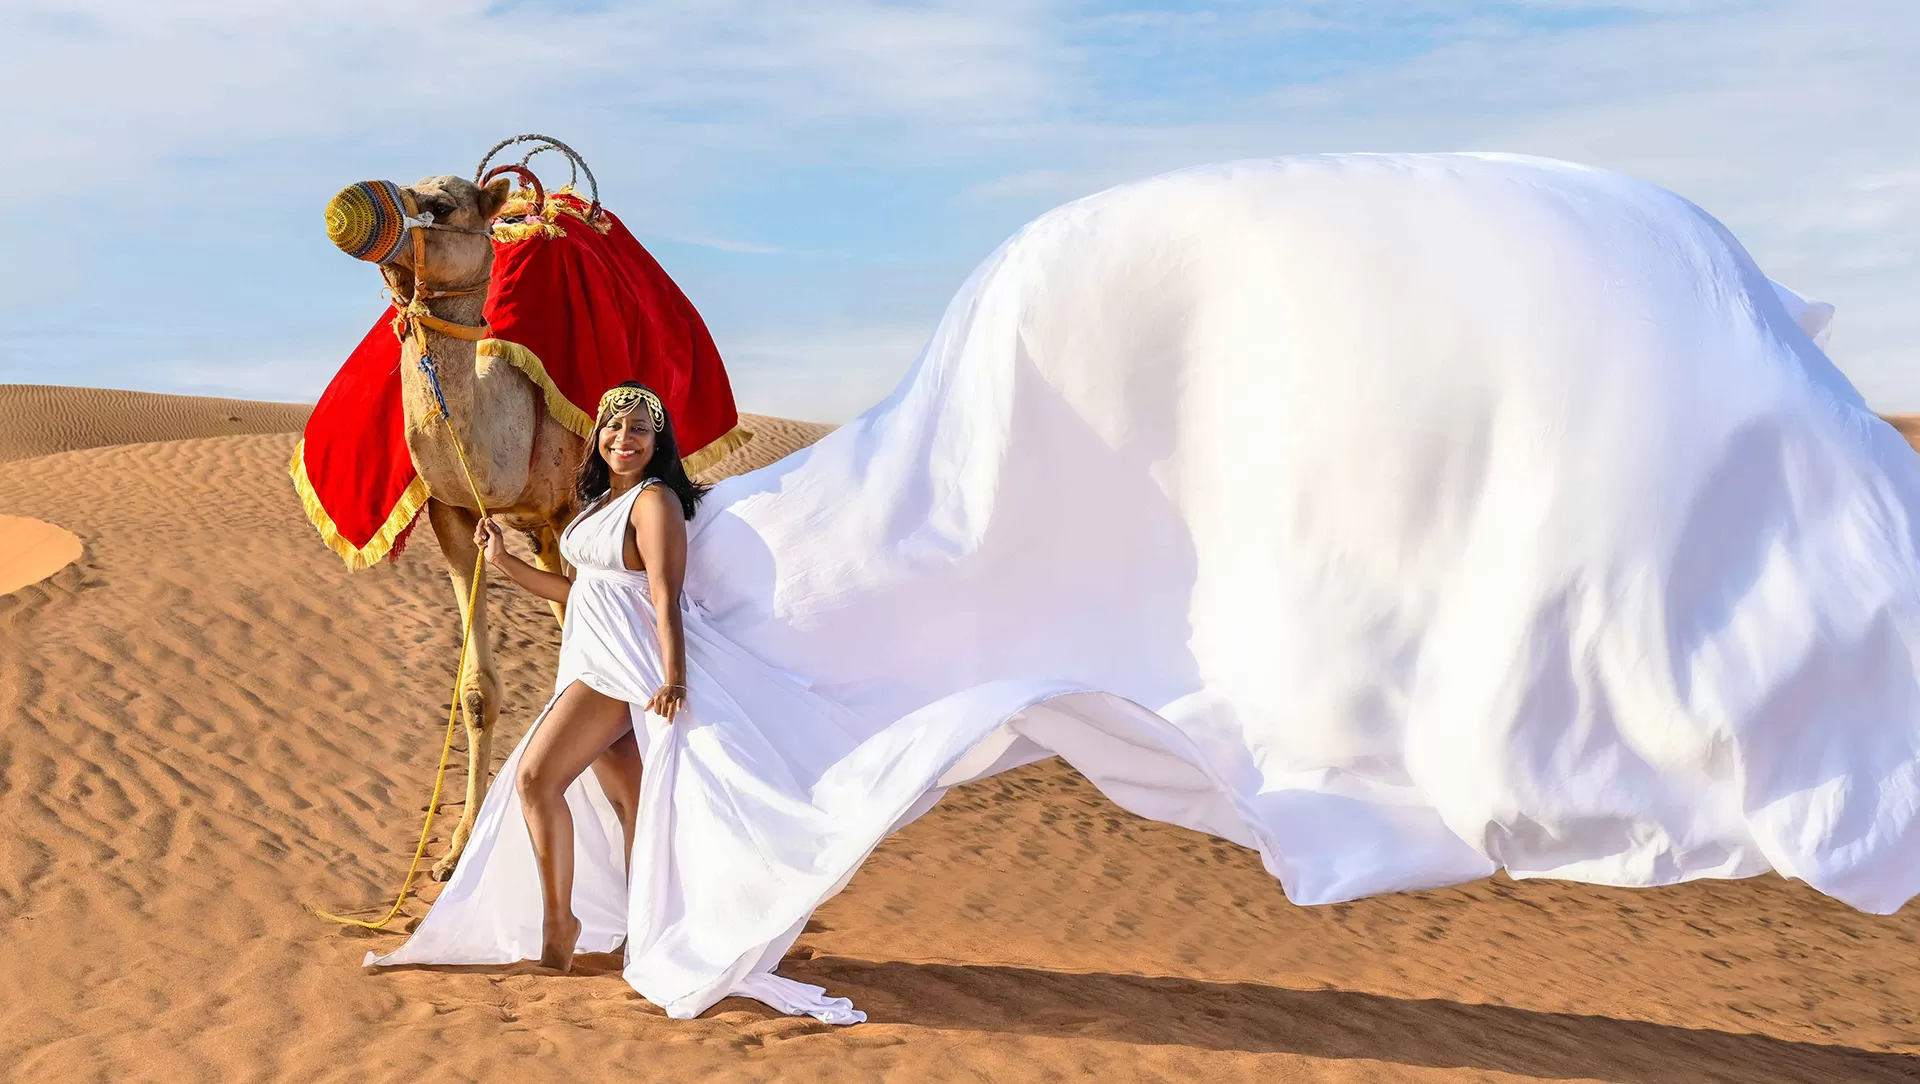 Flying Dress Photoshoot Dubai: Capturing Dreams in the Sky